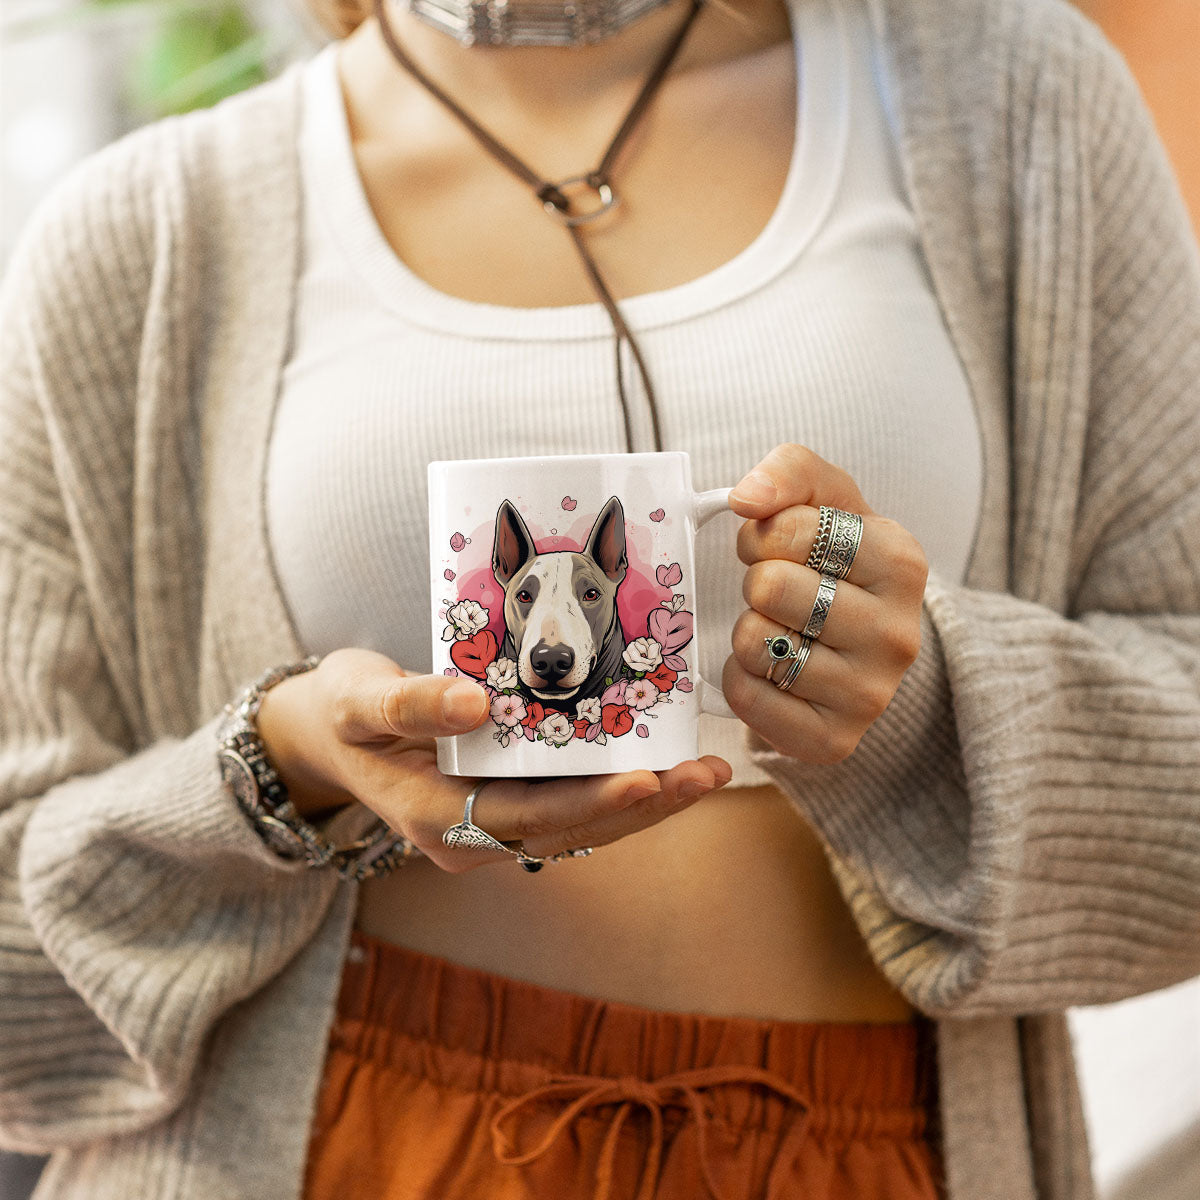 Custom Valentine's Day Dog Mug, Personalized Valentine's Day Gift for Dog Lover, Cute Bull Terrier Love Ceramic Mug, Dog Coffee Mugs, Personalized Pet Mugs, Cute Valentine Puppy Heart Ceramic Mug, Valentines Gift